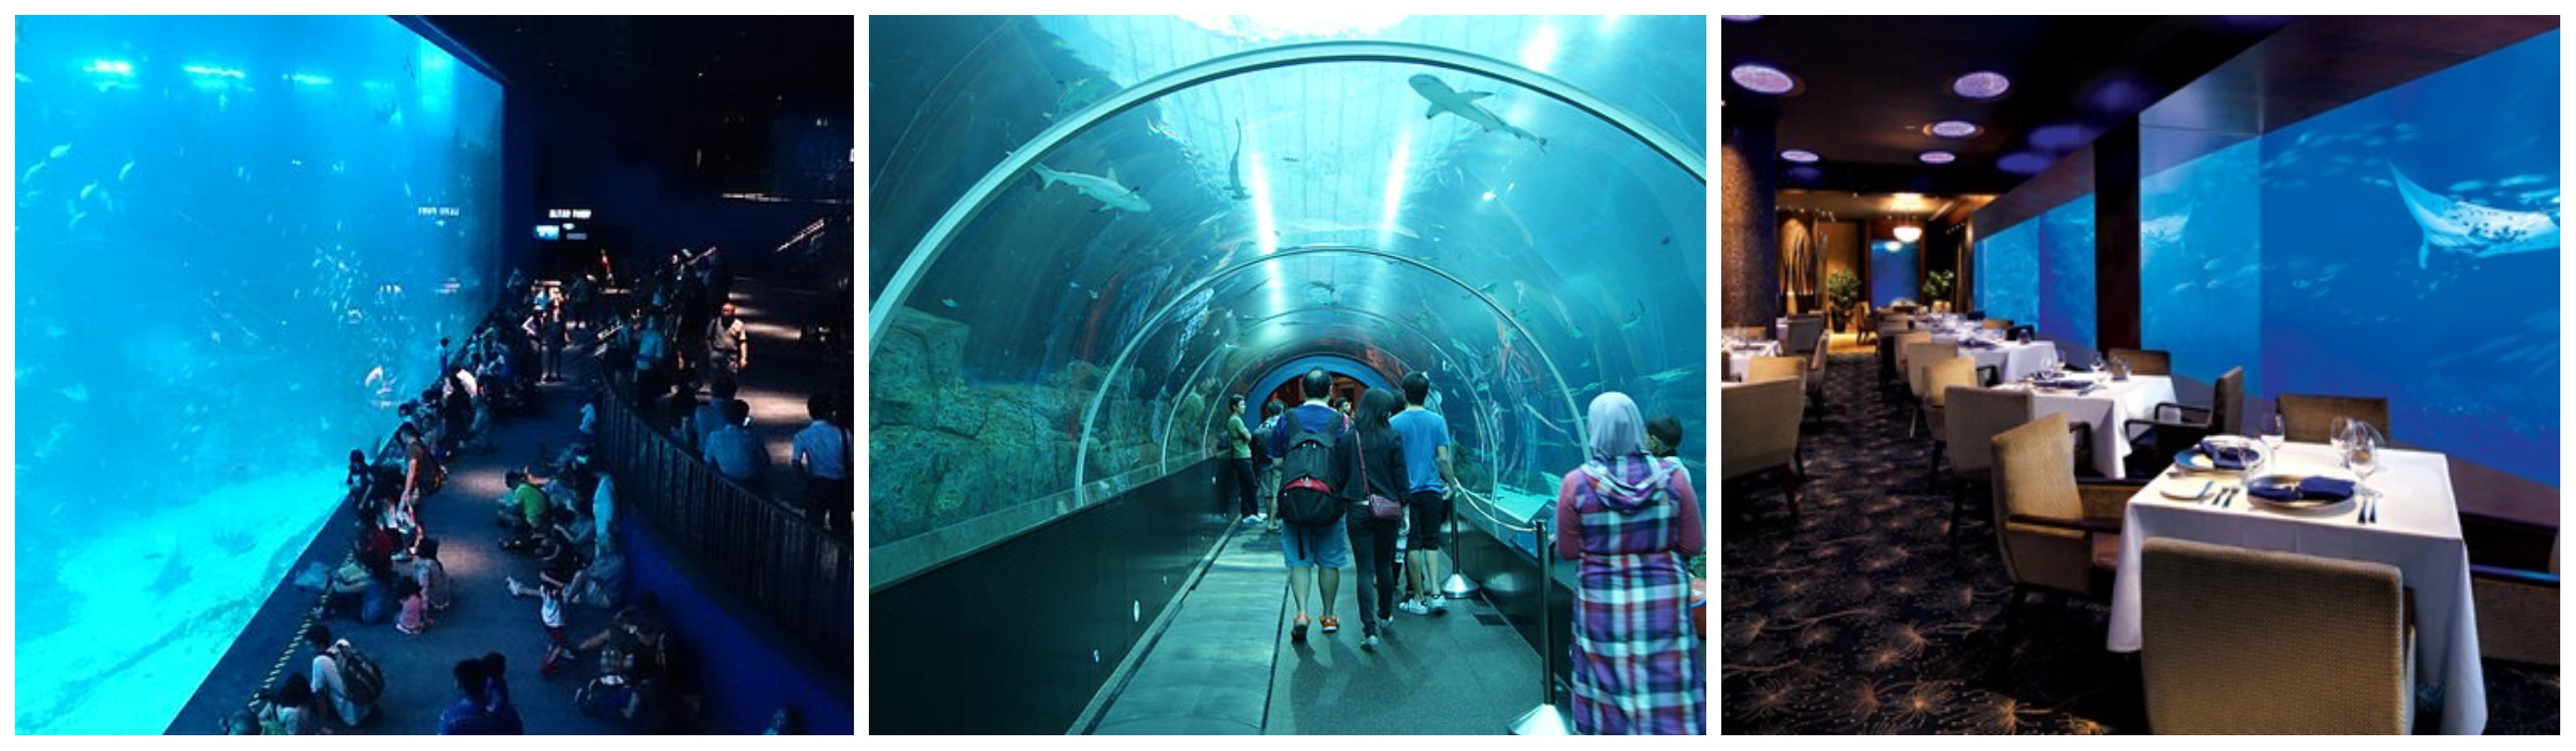 Things To Do In Sentosa SEA Aquarium Sentosa Singapore